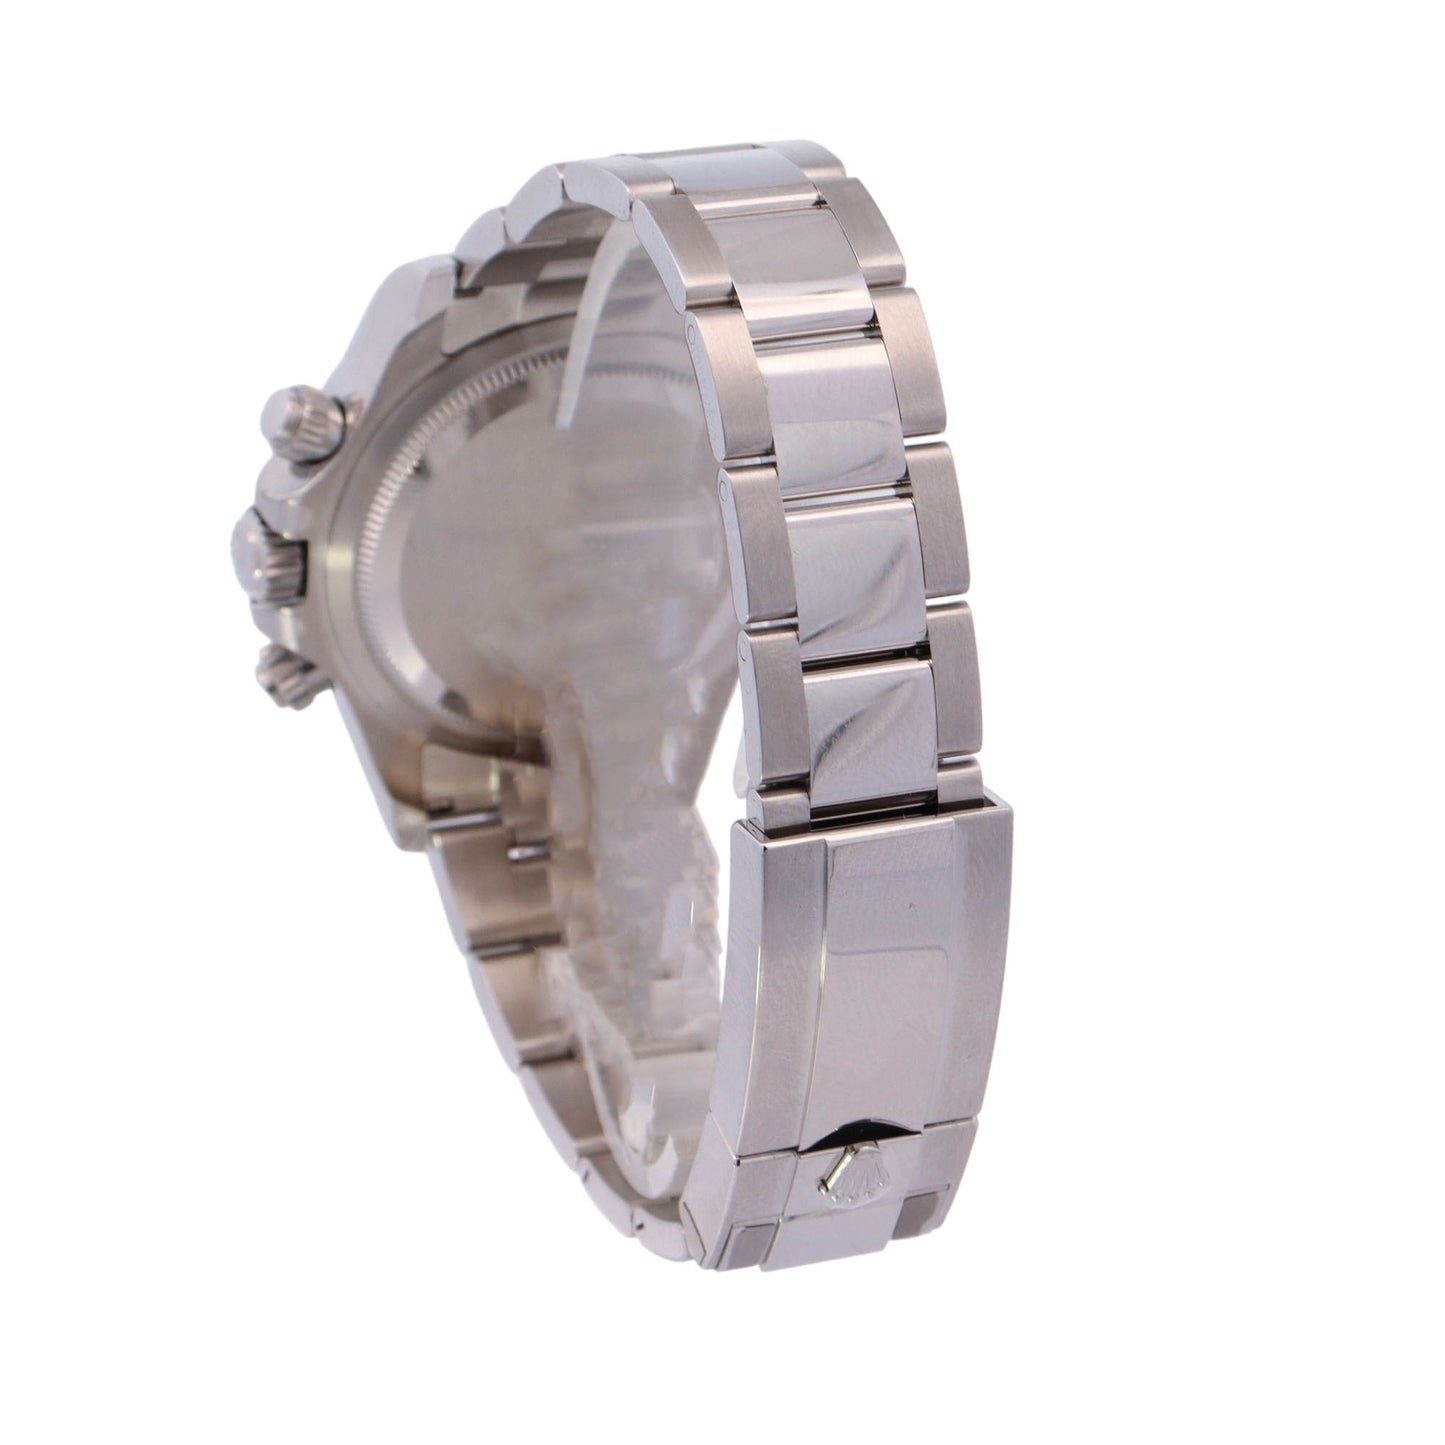 Rolex Daytona “Panda” Stainless Steel 40mm White Chronograph Dial Watch Reference# 126500LN - Happy Jewelers Fine Jewelry Lifetime Warranty